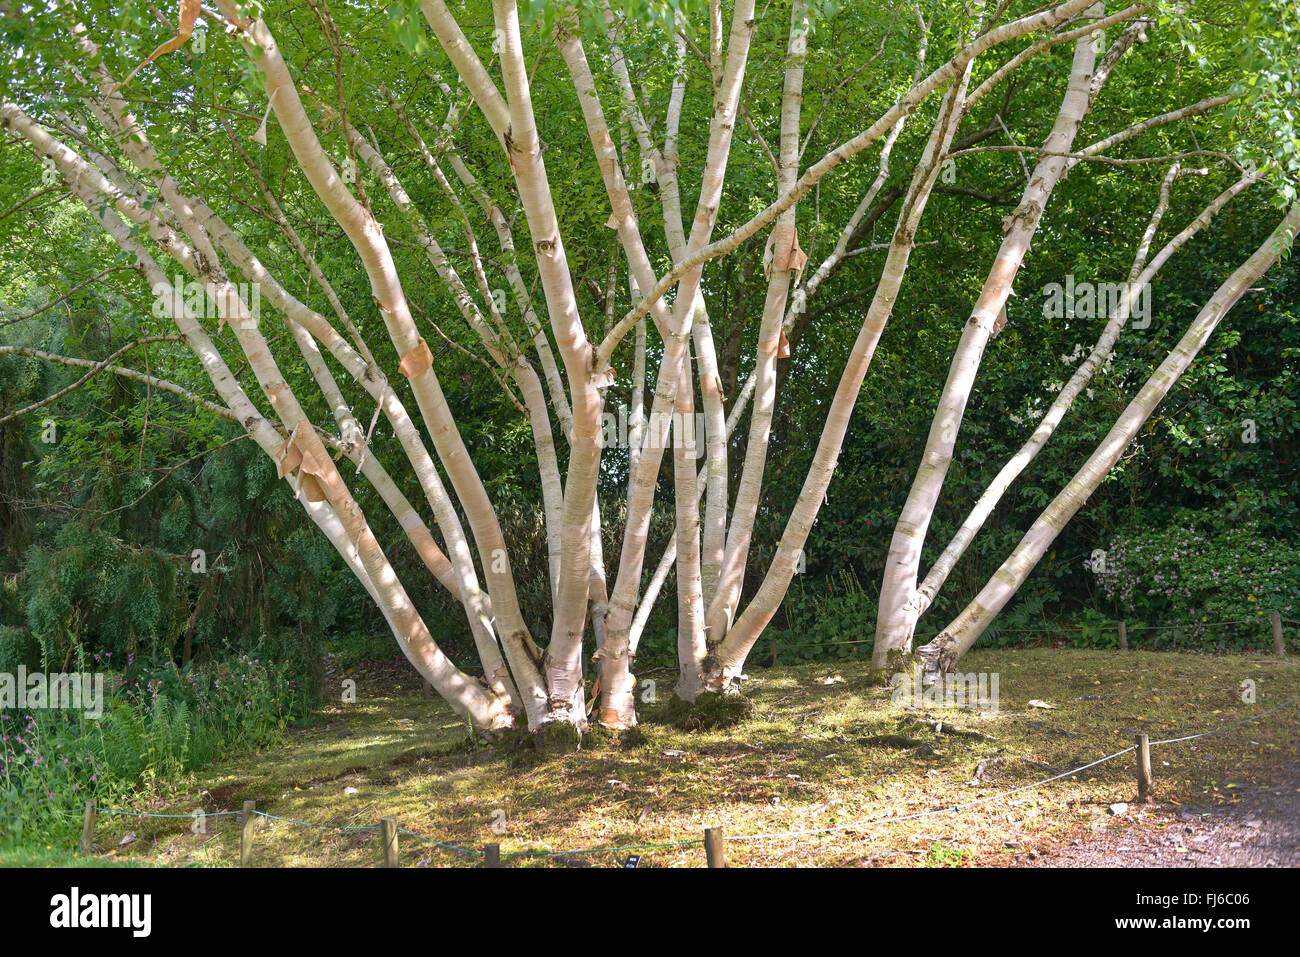 Erman's Birch, Russian Rock Birch (Betula ermanii 'Grayswood Hill', Betula ermanii Grayswood Hill), trunks of cultivar Grayswood Hill, United Kingdom Stock Photo